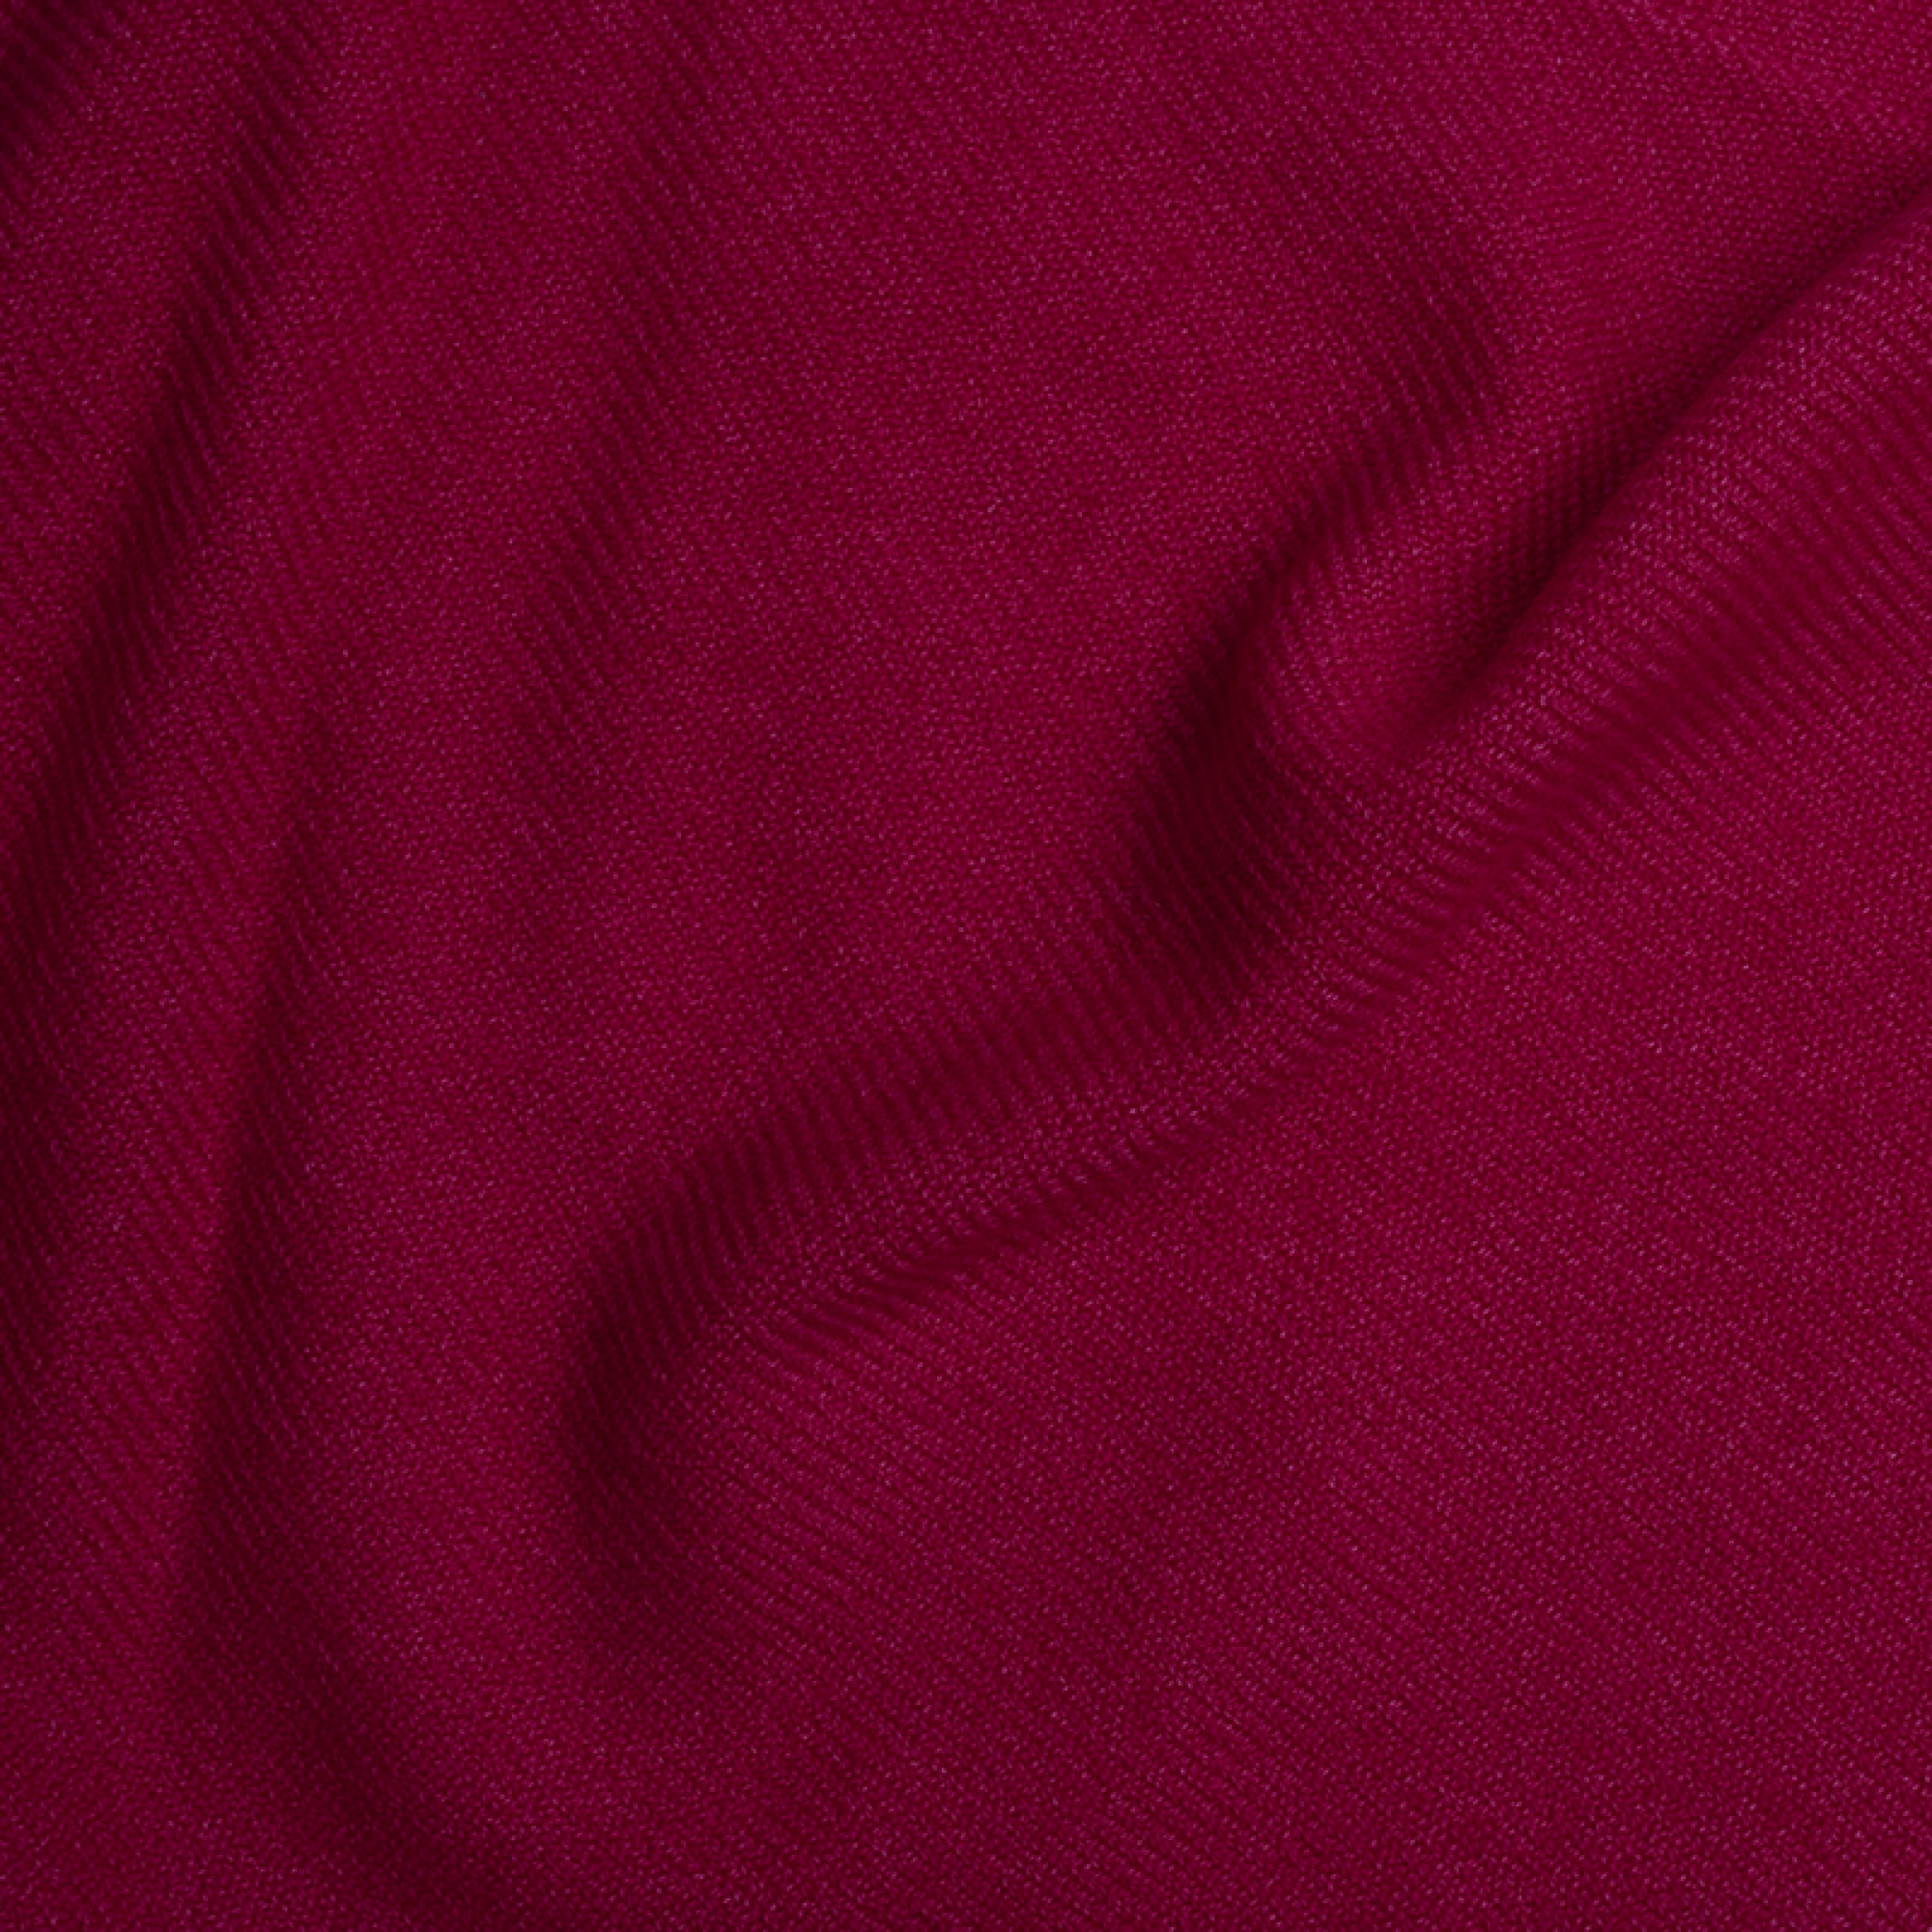 Cashmere accessories blanket toodoo plain l 220 x 220 bright rose 220x220cm